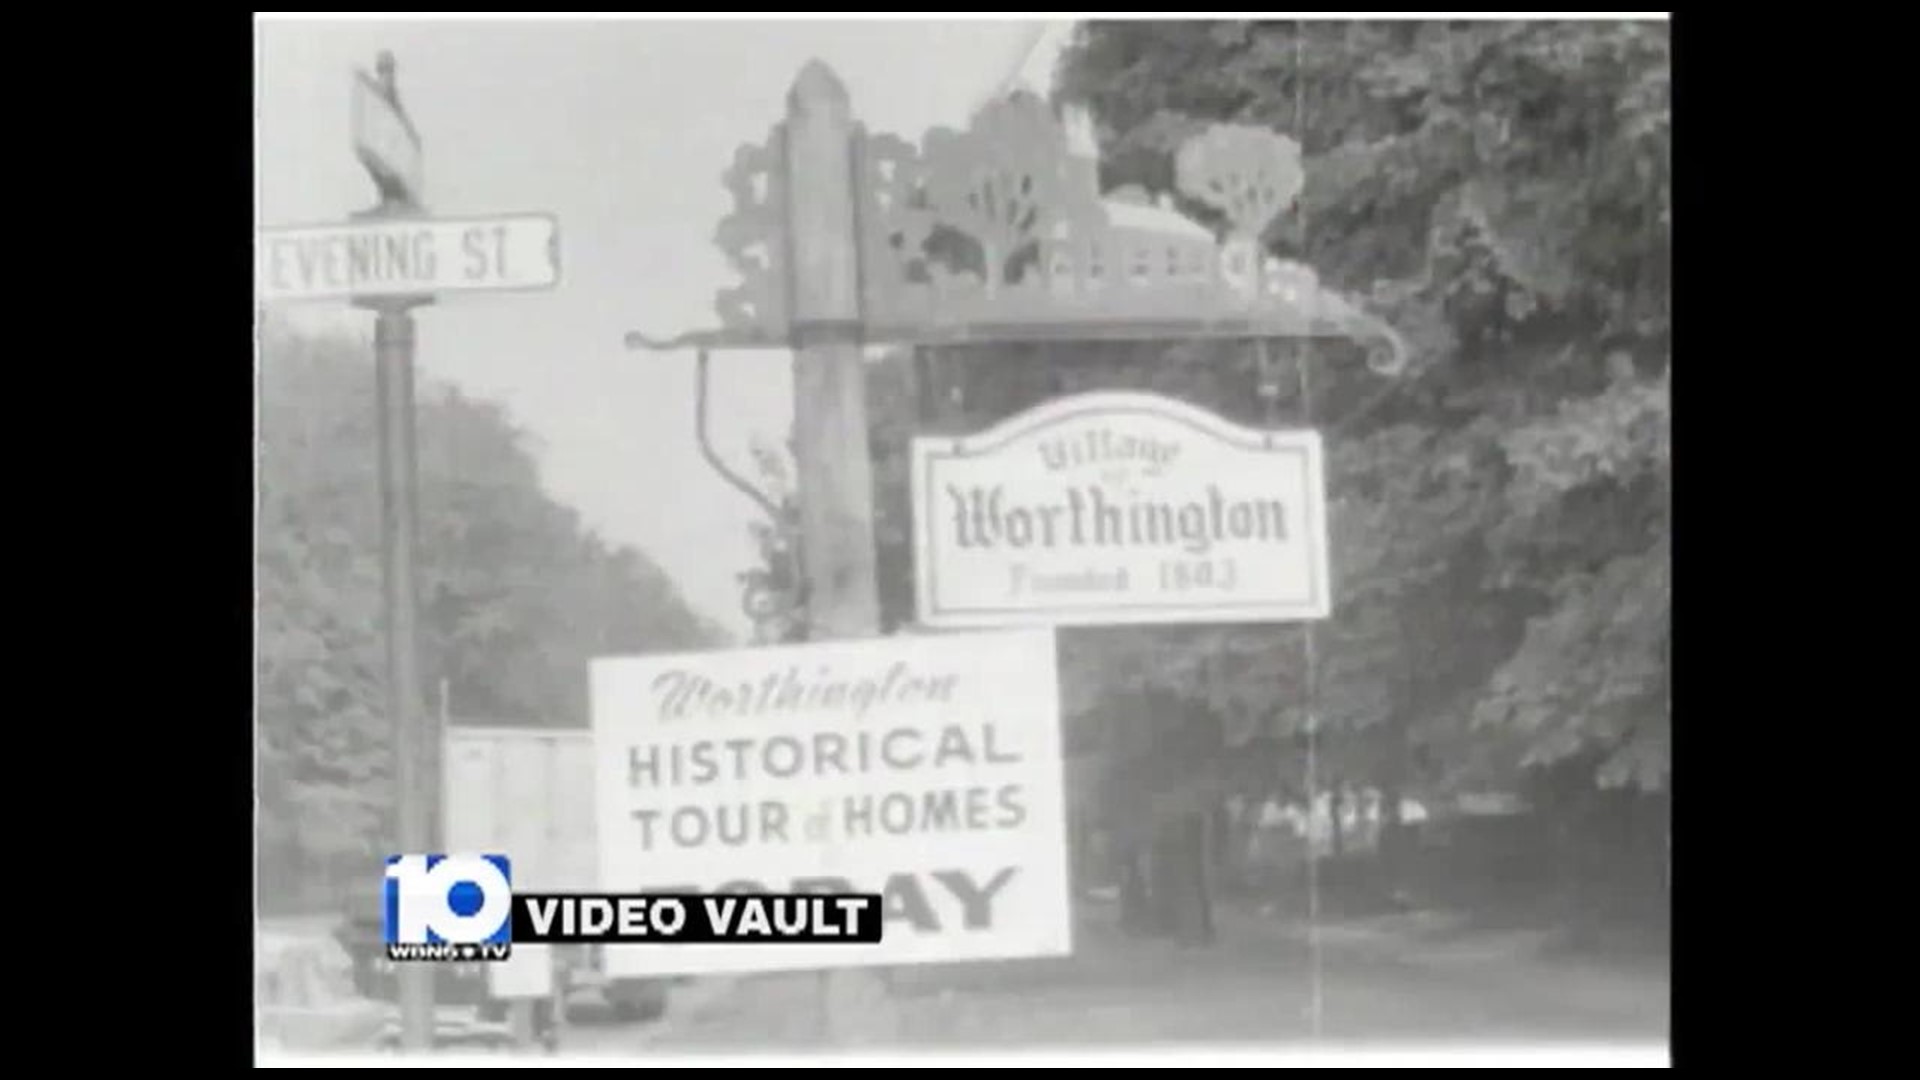 VIDEO VAULT: Worthington Historic Tour